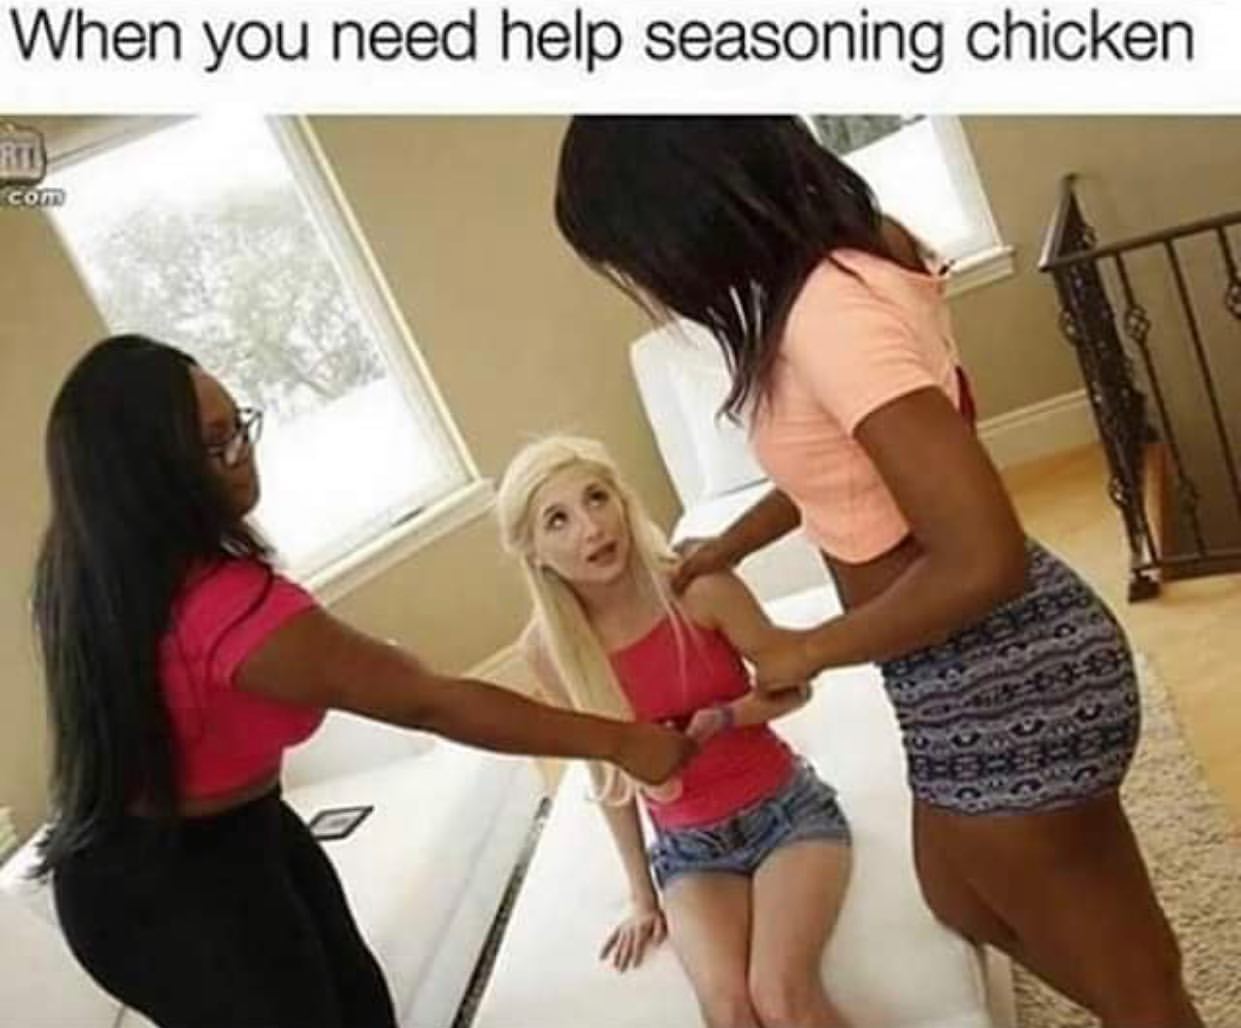 When you need help seasoning chicken.